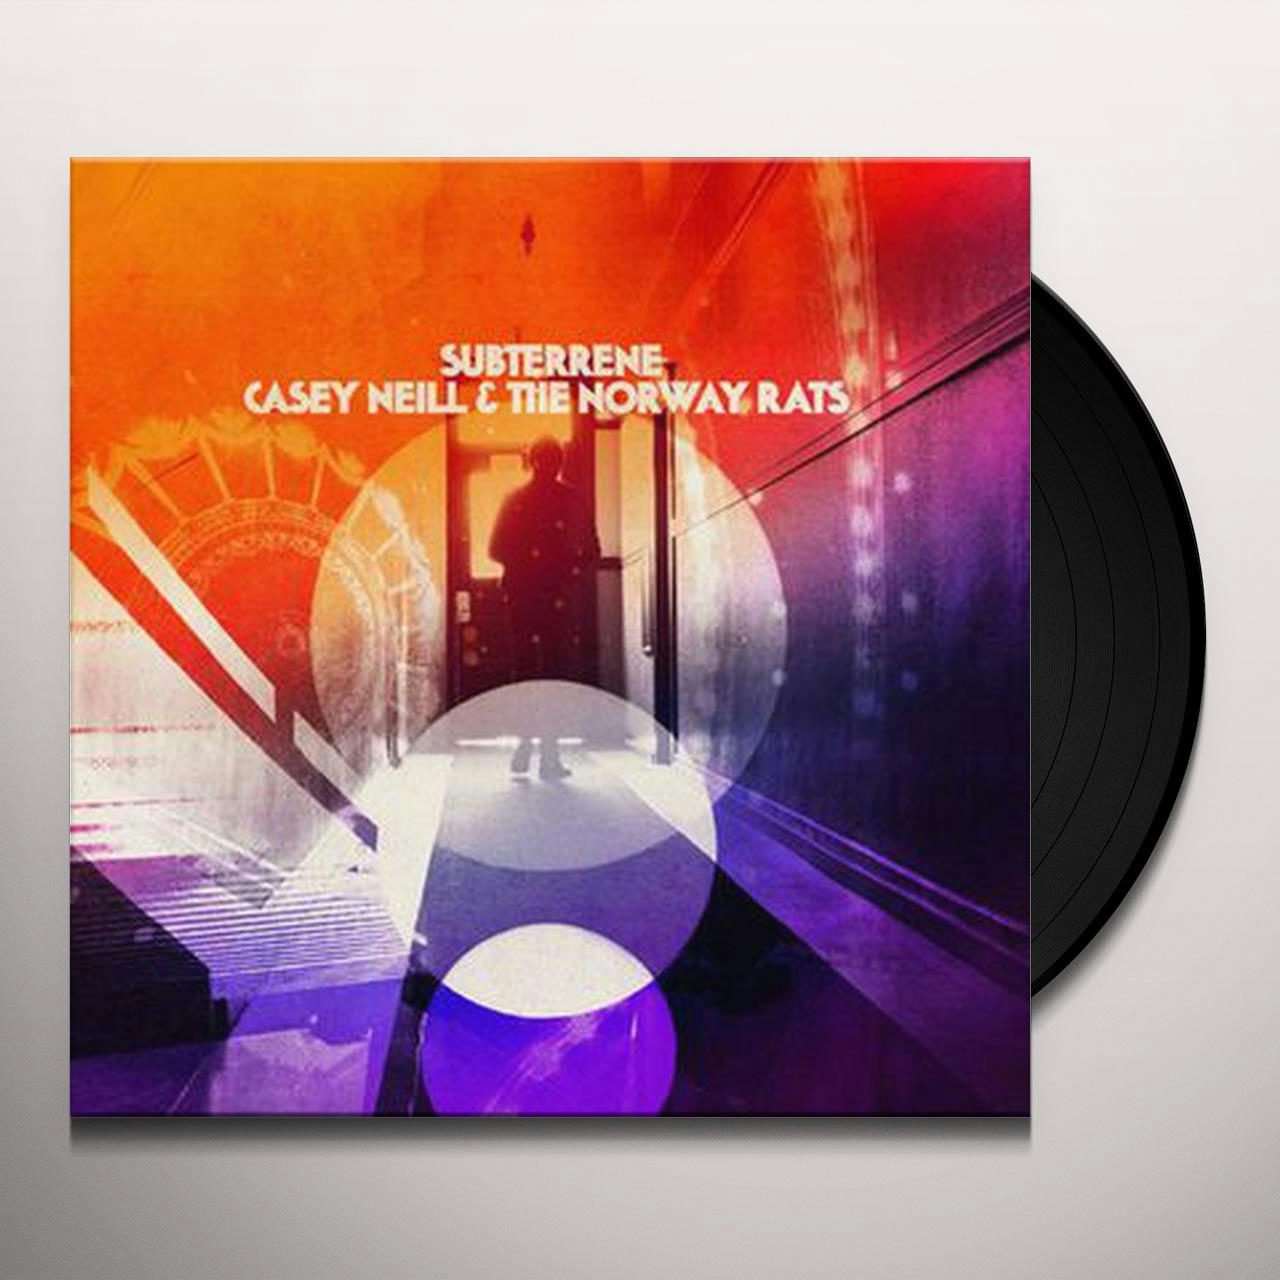 Casey Neill & The Norway Rats Subterrene Vinyl Record